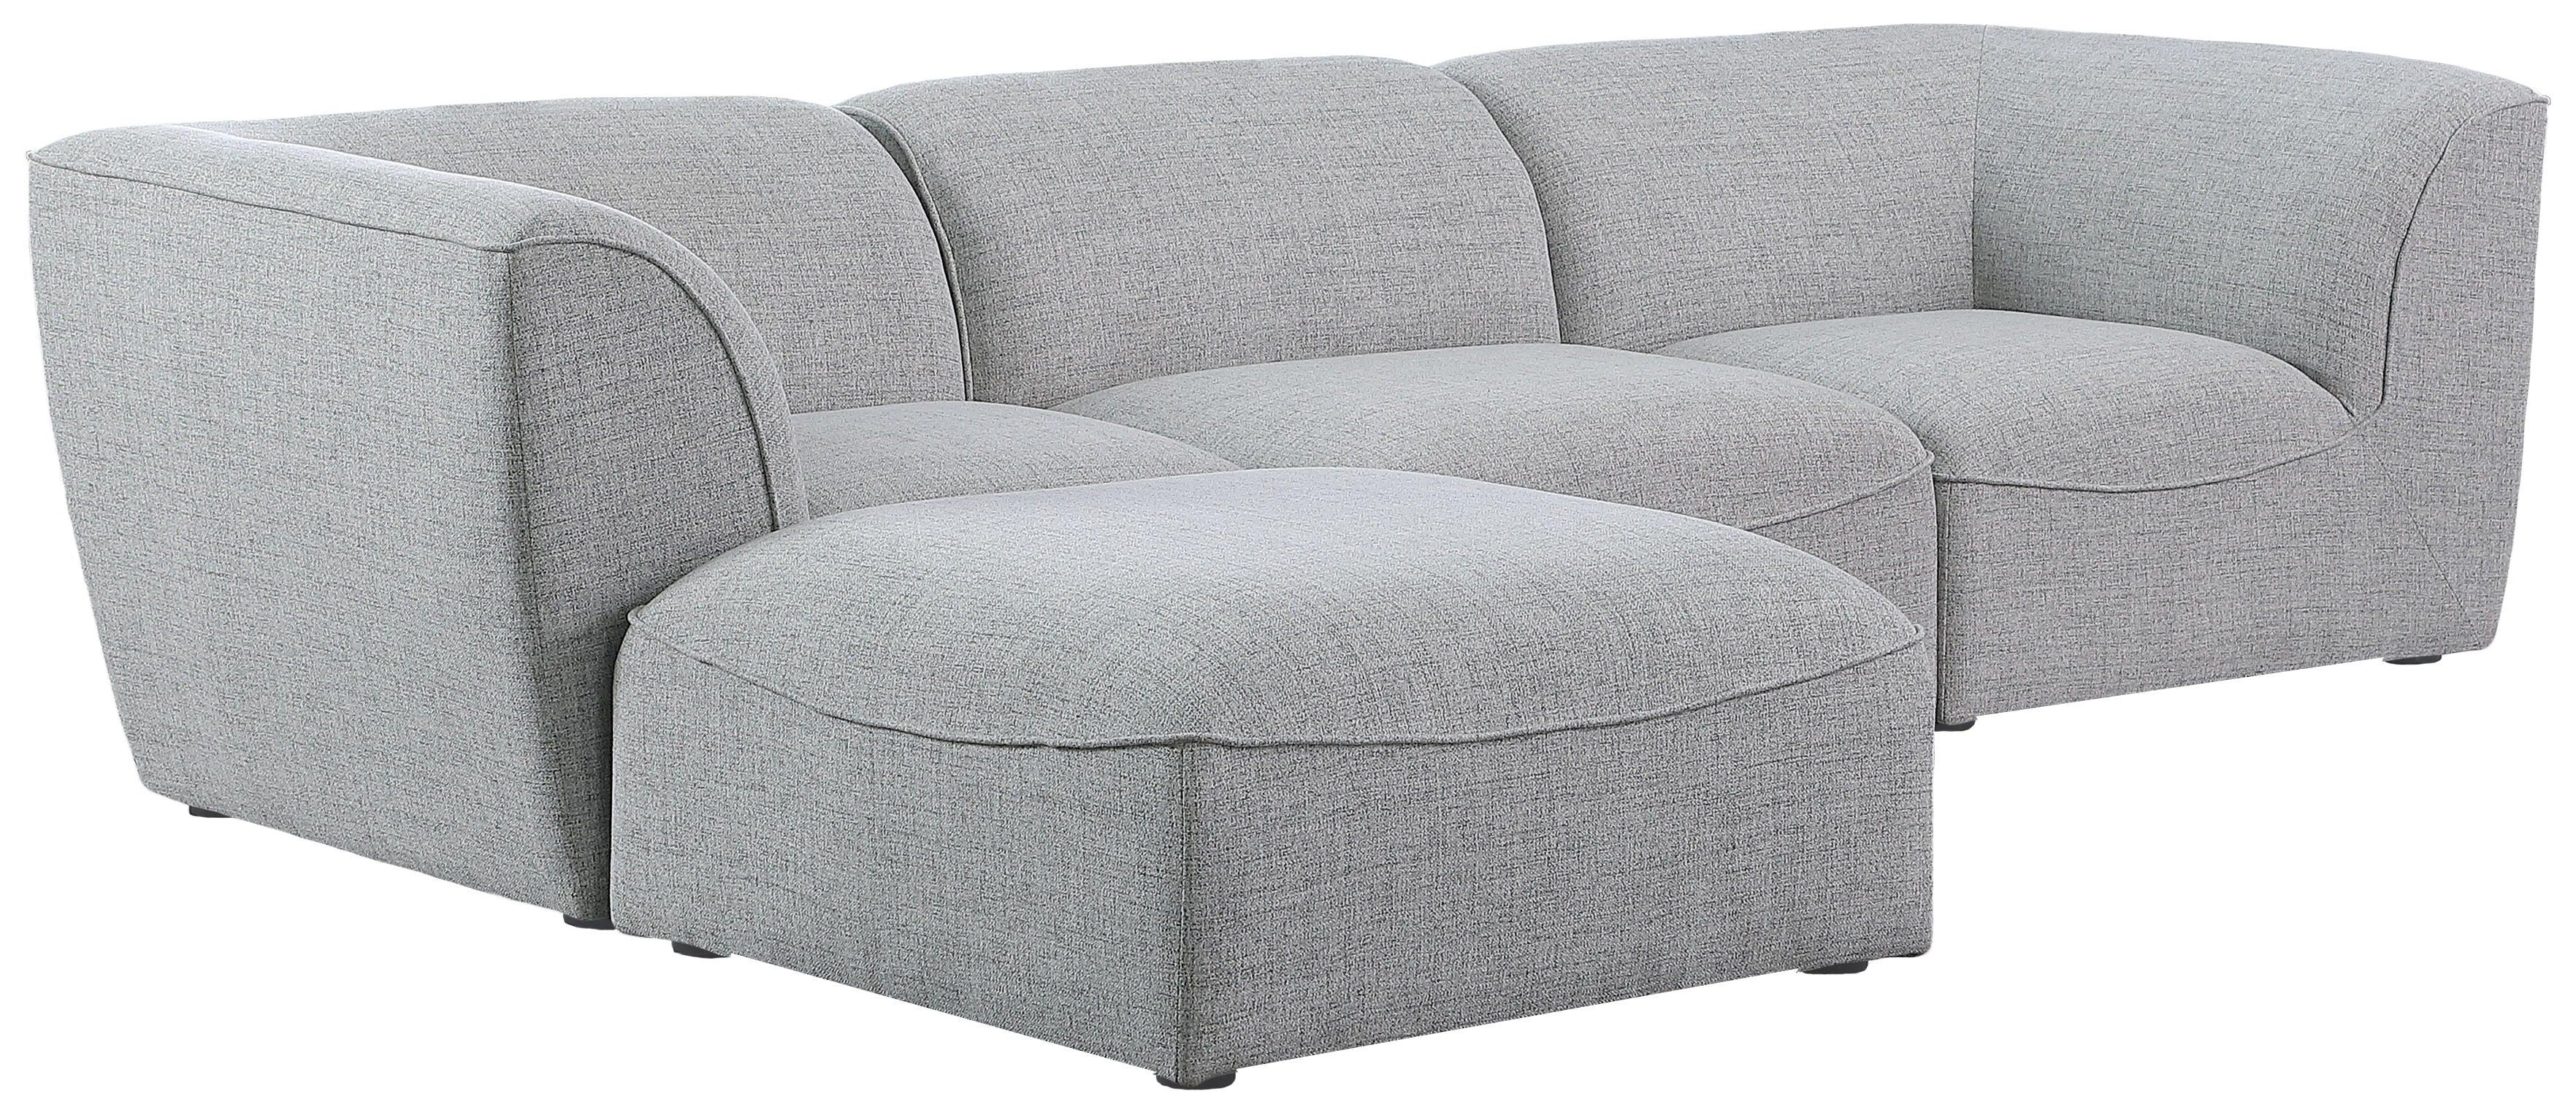 Meridian Furniture - Miramar - Modular Sectional 4 Piece - Gray - Fabric - 5th Avenue Furniture